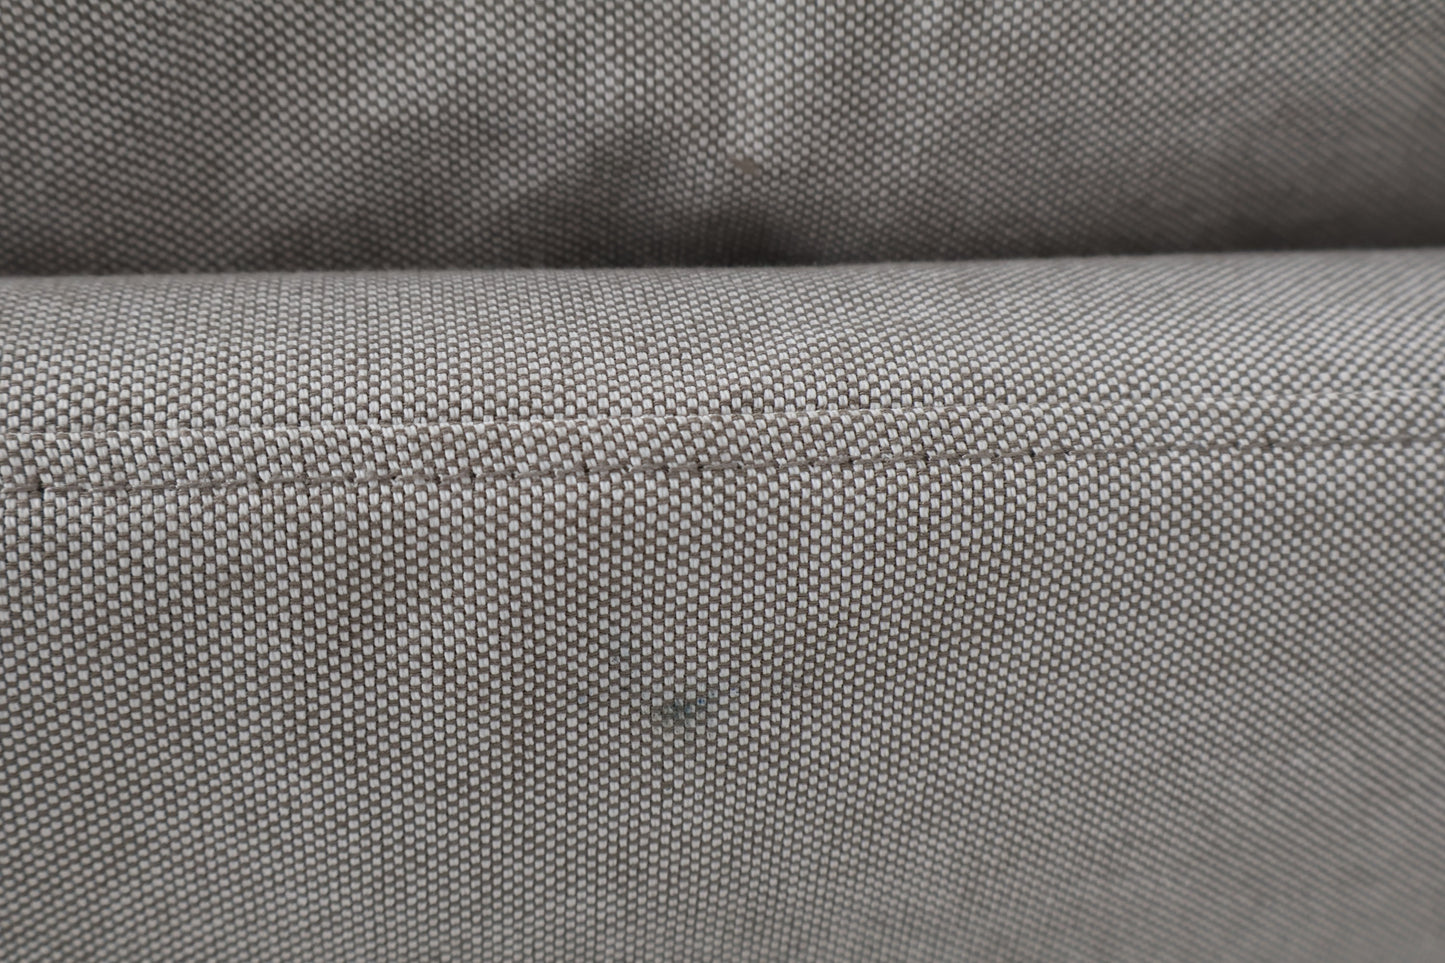 Nyrenset | IKEA Ektorp 3-seter sofa